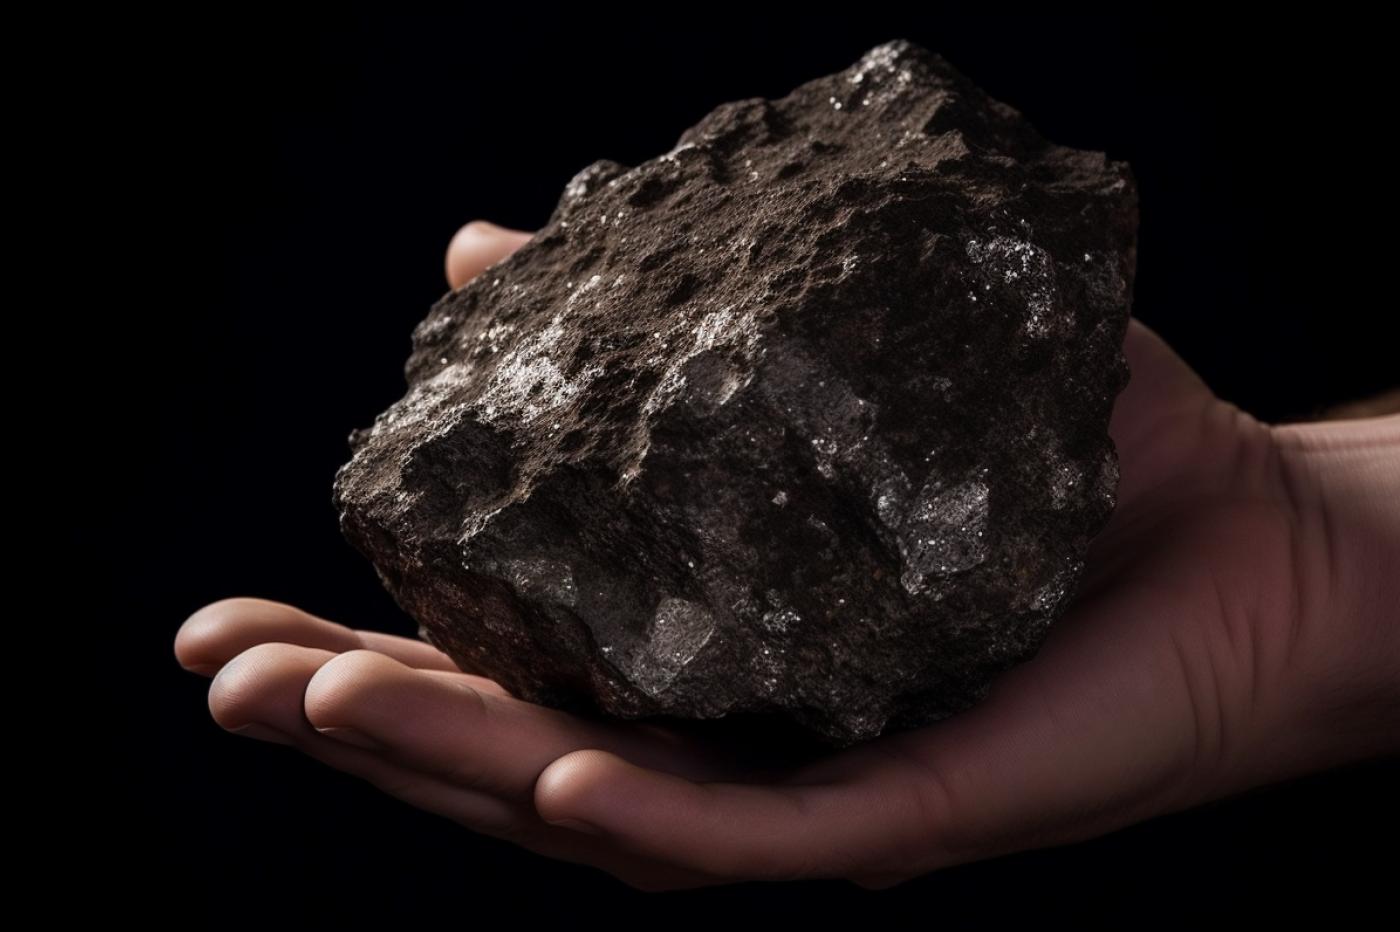 Meteorite hunters destroyed billions of years of data